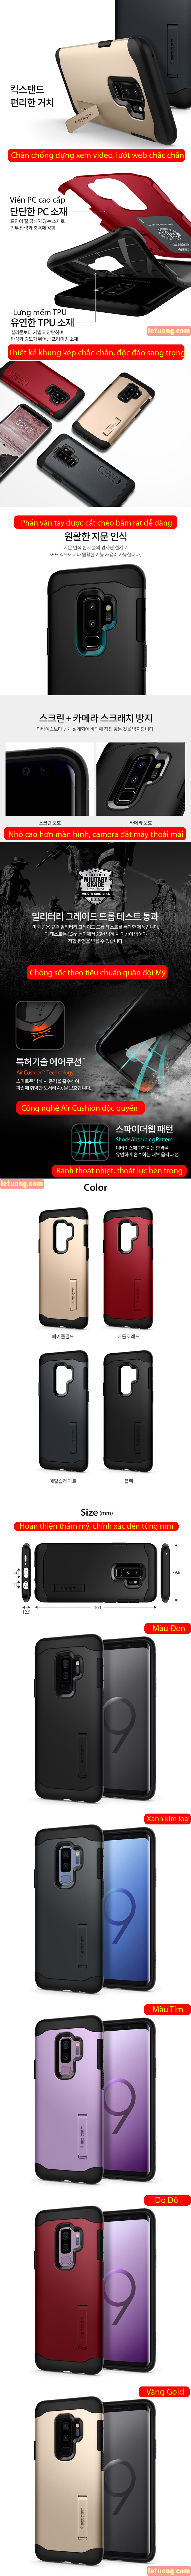 Bao da S9 Plus, Ốp lưng Galaxy S9 Plus Hãng Spigen từ Mỹ - 4